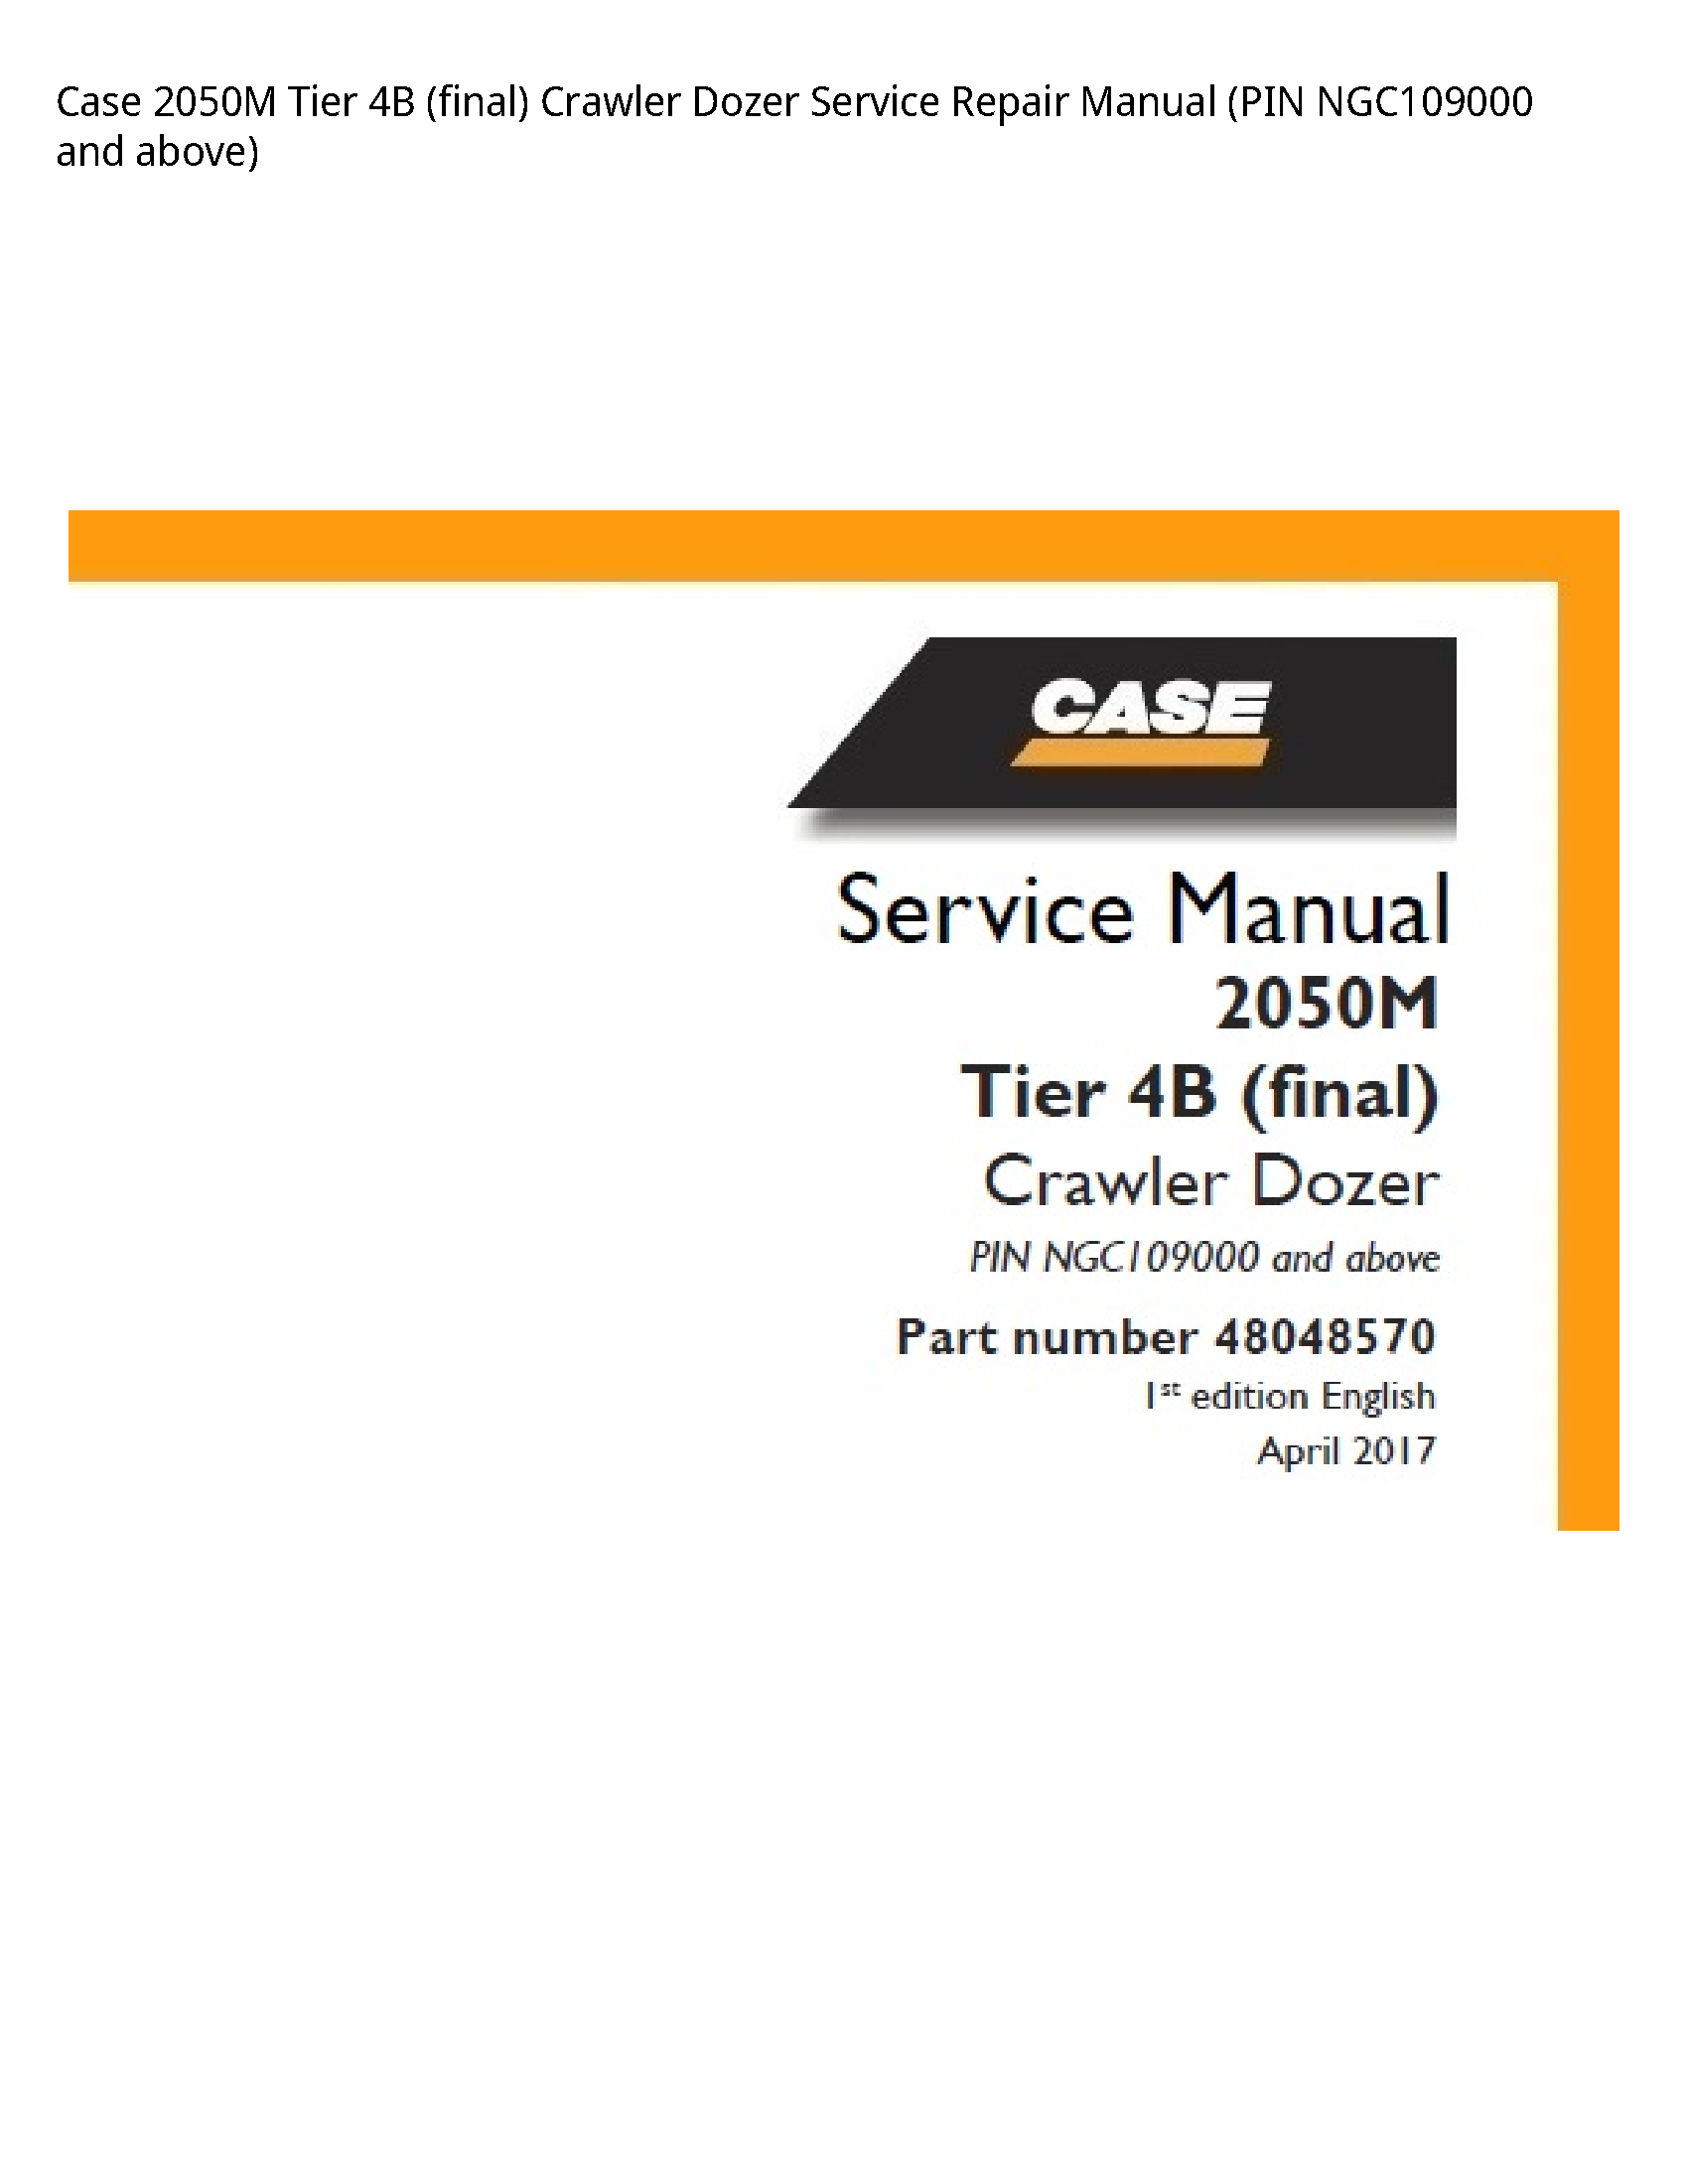 Case/Case IH 2050M Tier (final) Crawler Dozer manual